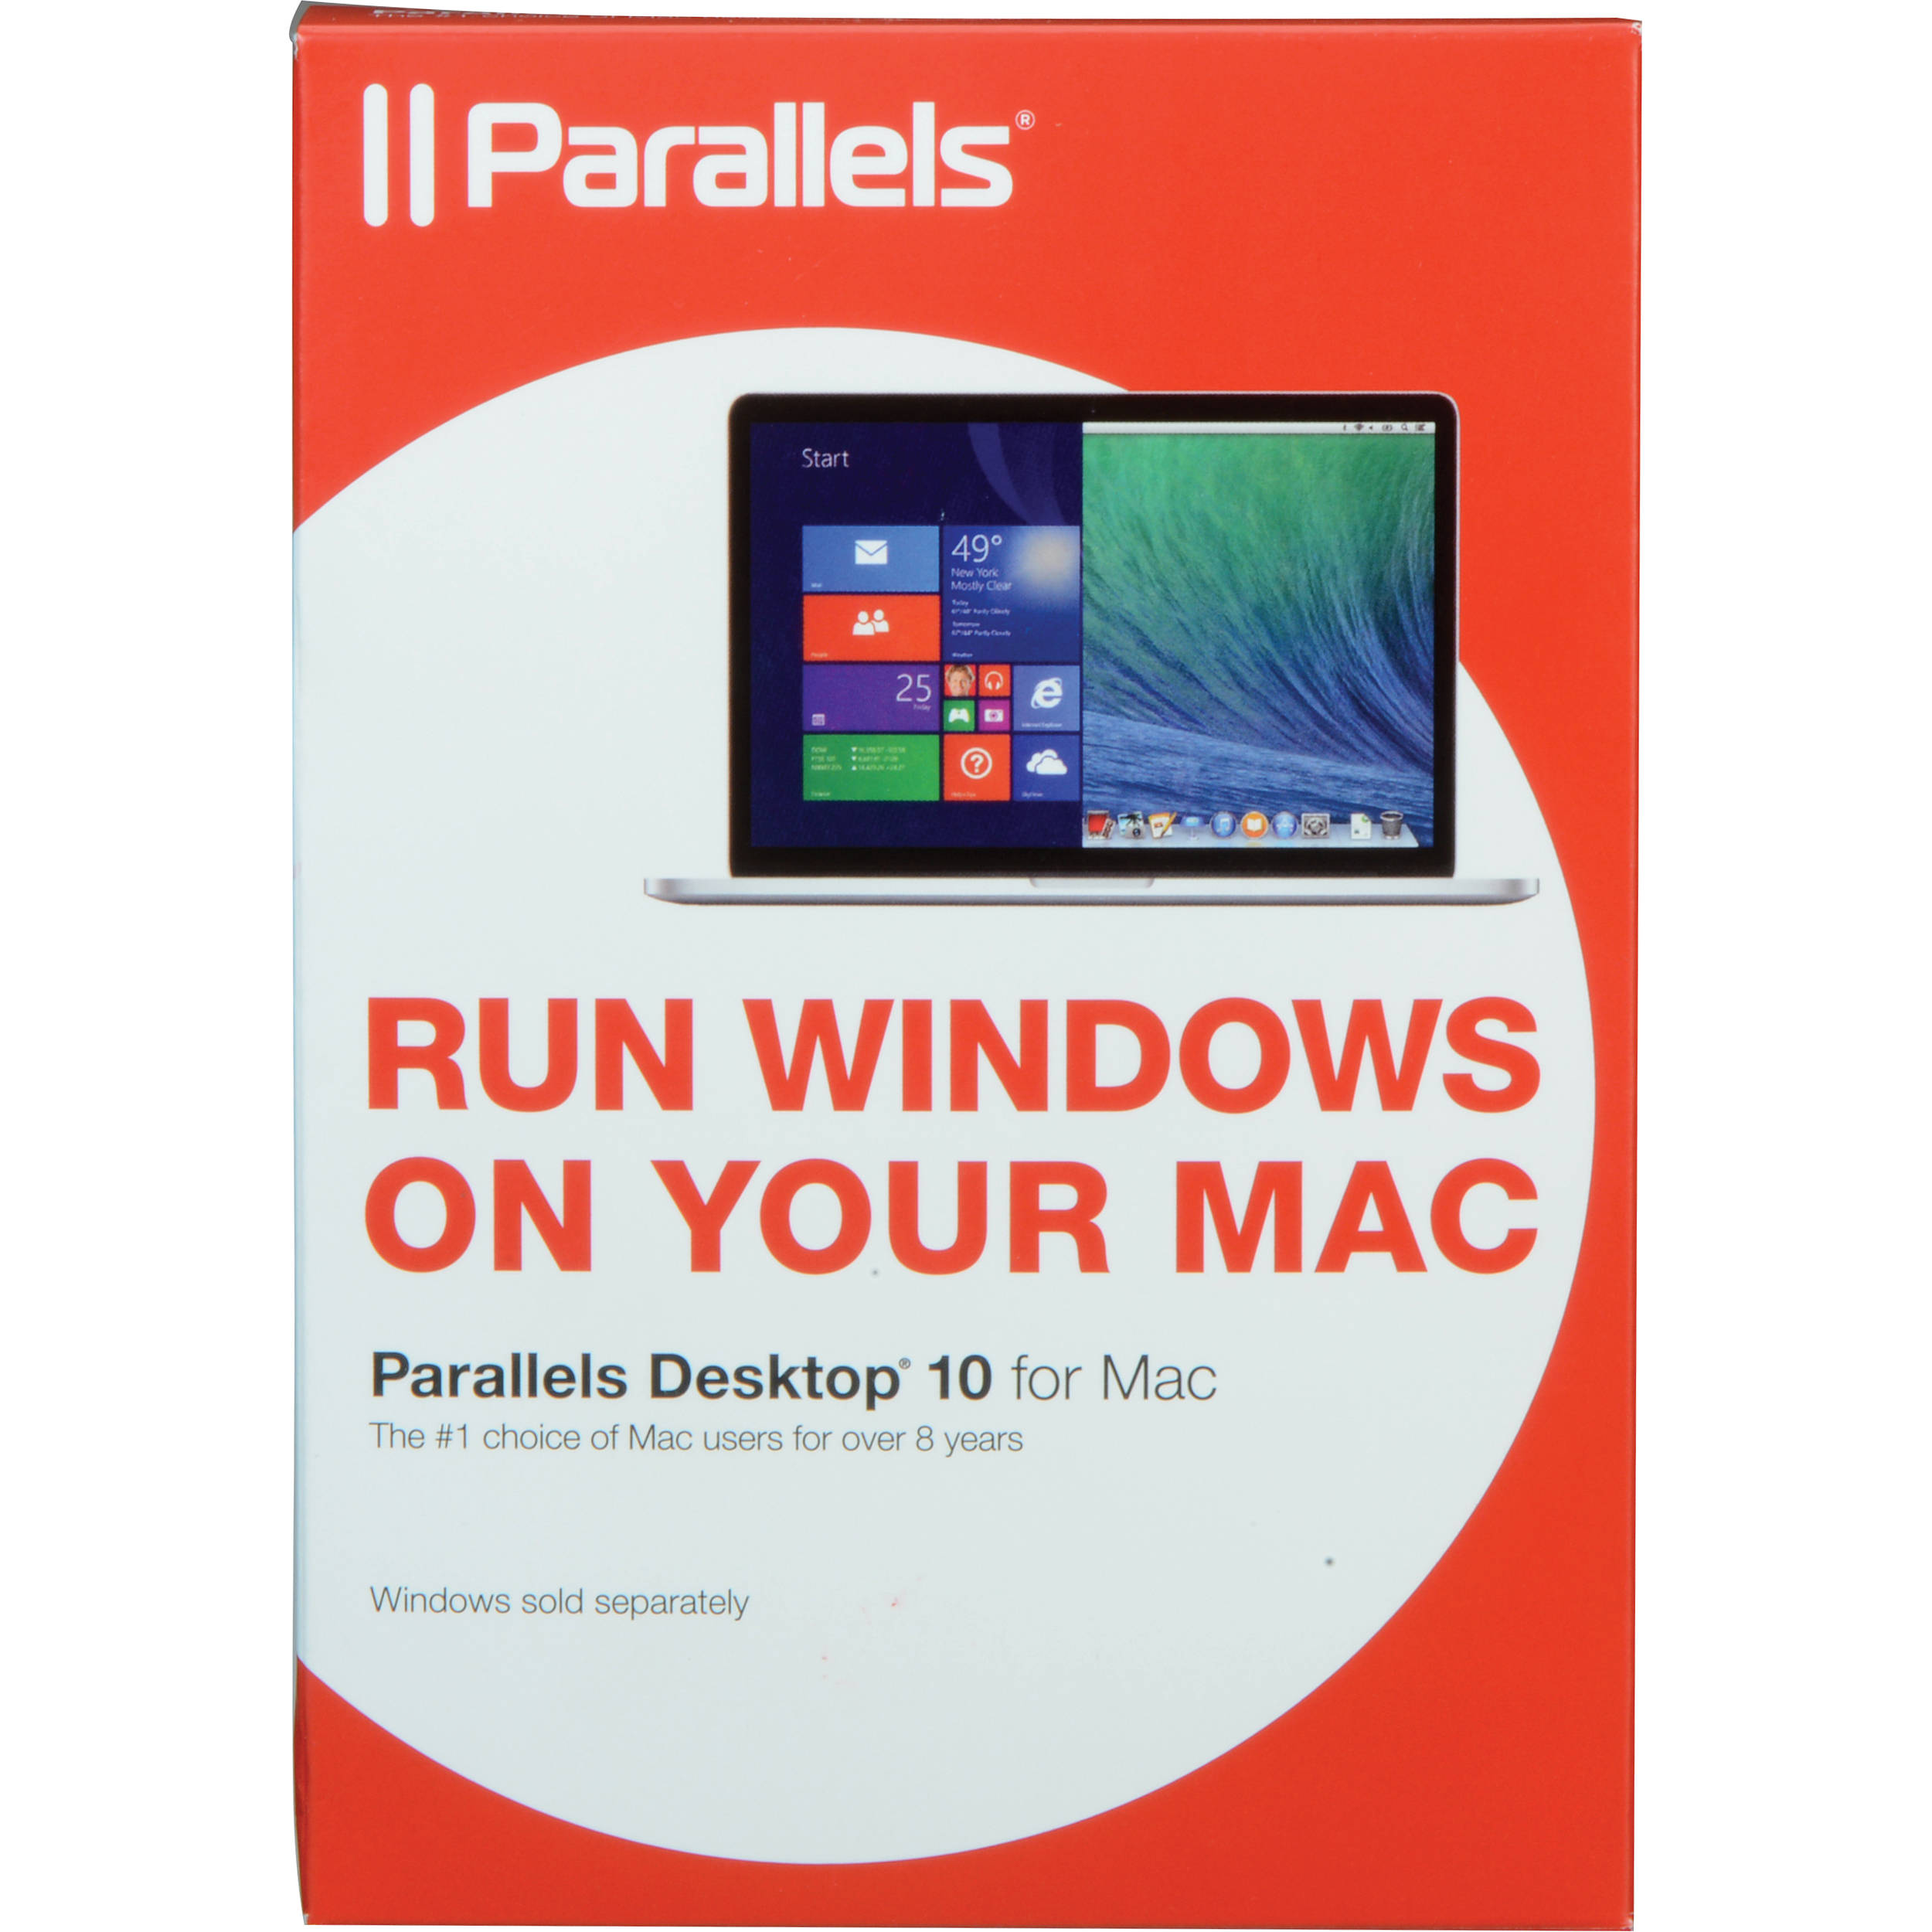 Parallels desktop 10 for mac download